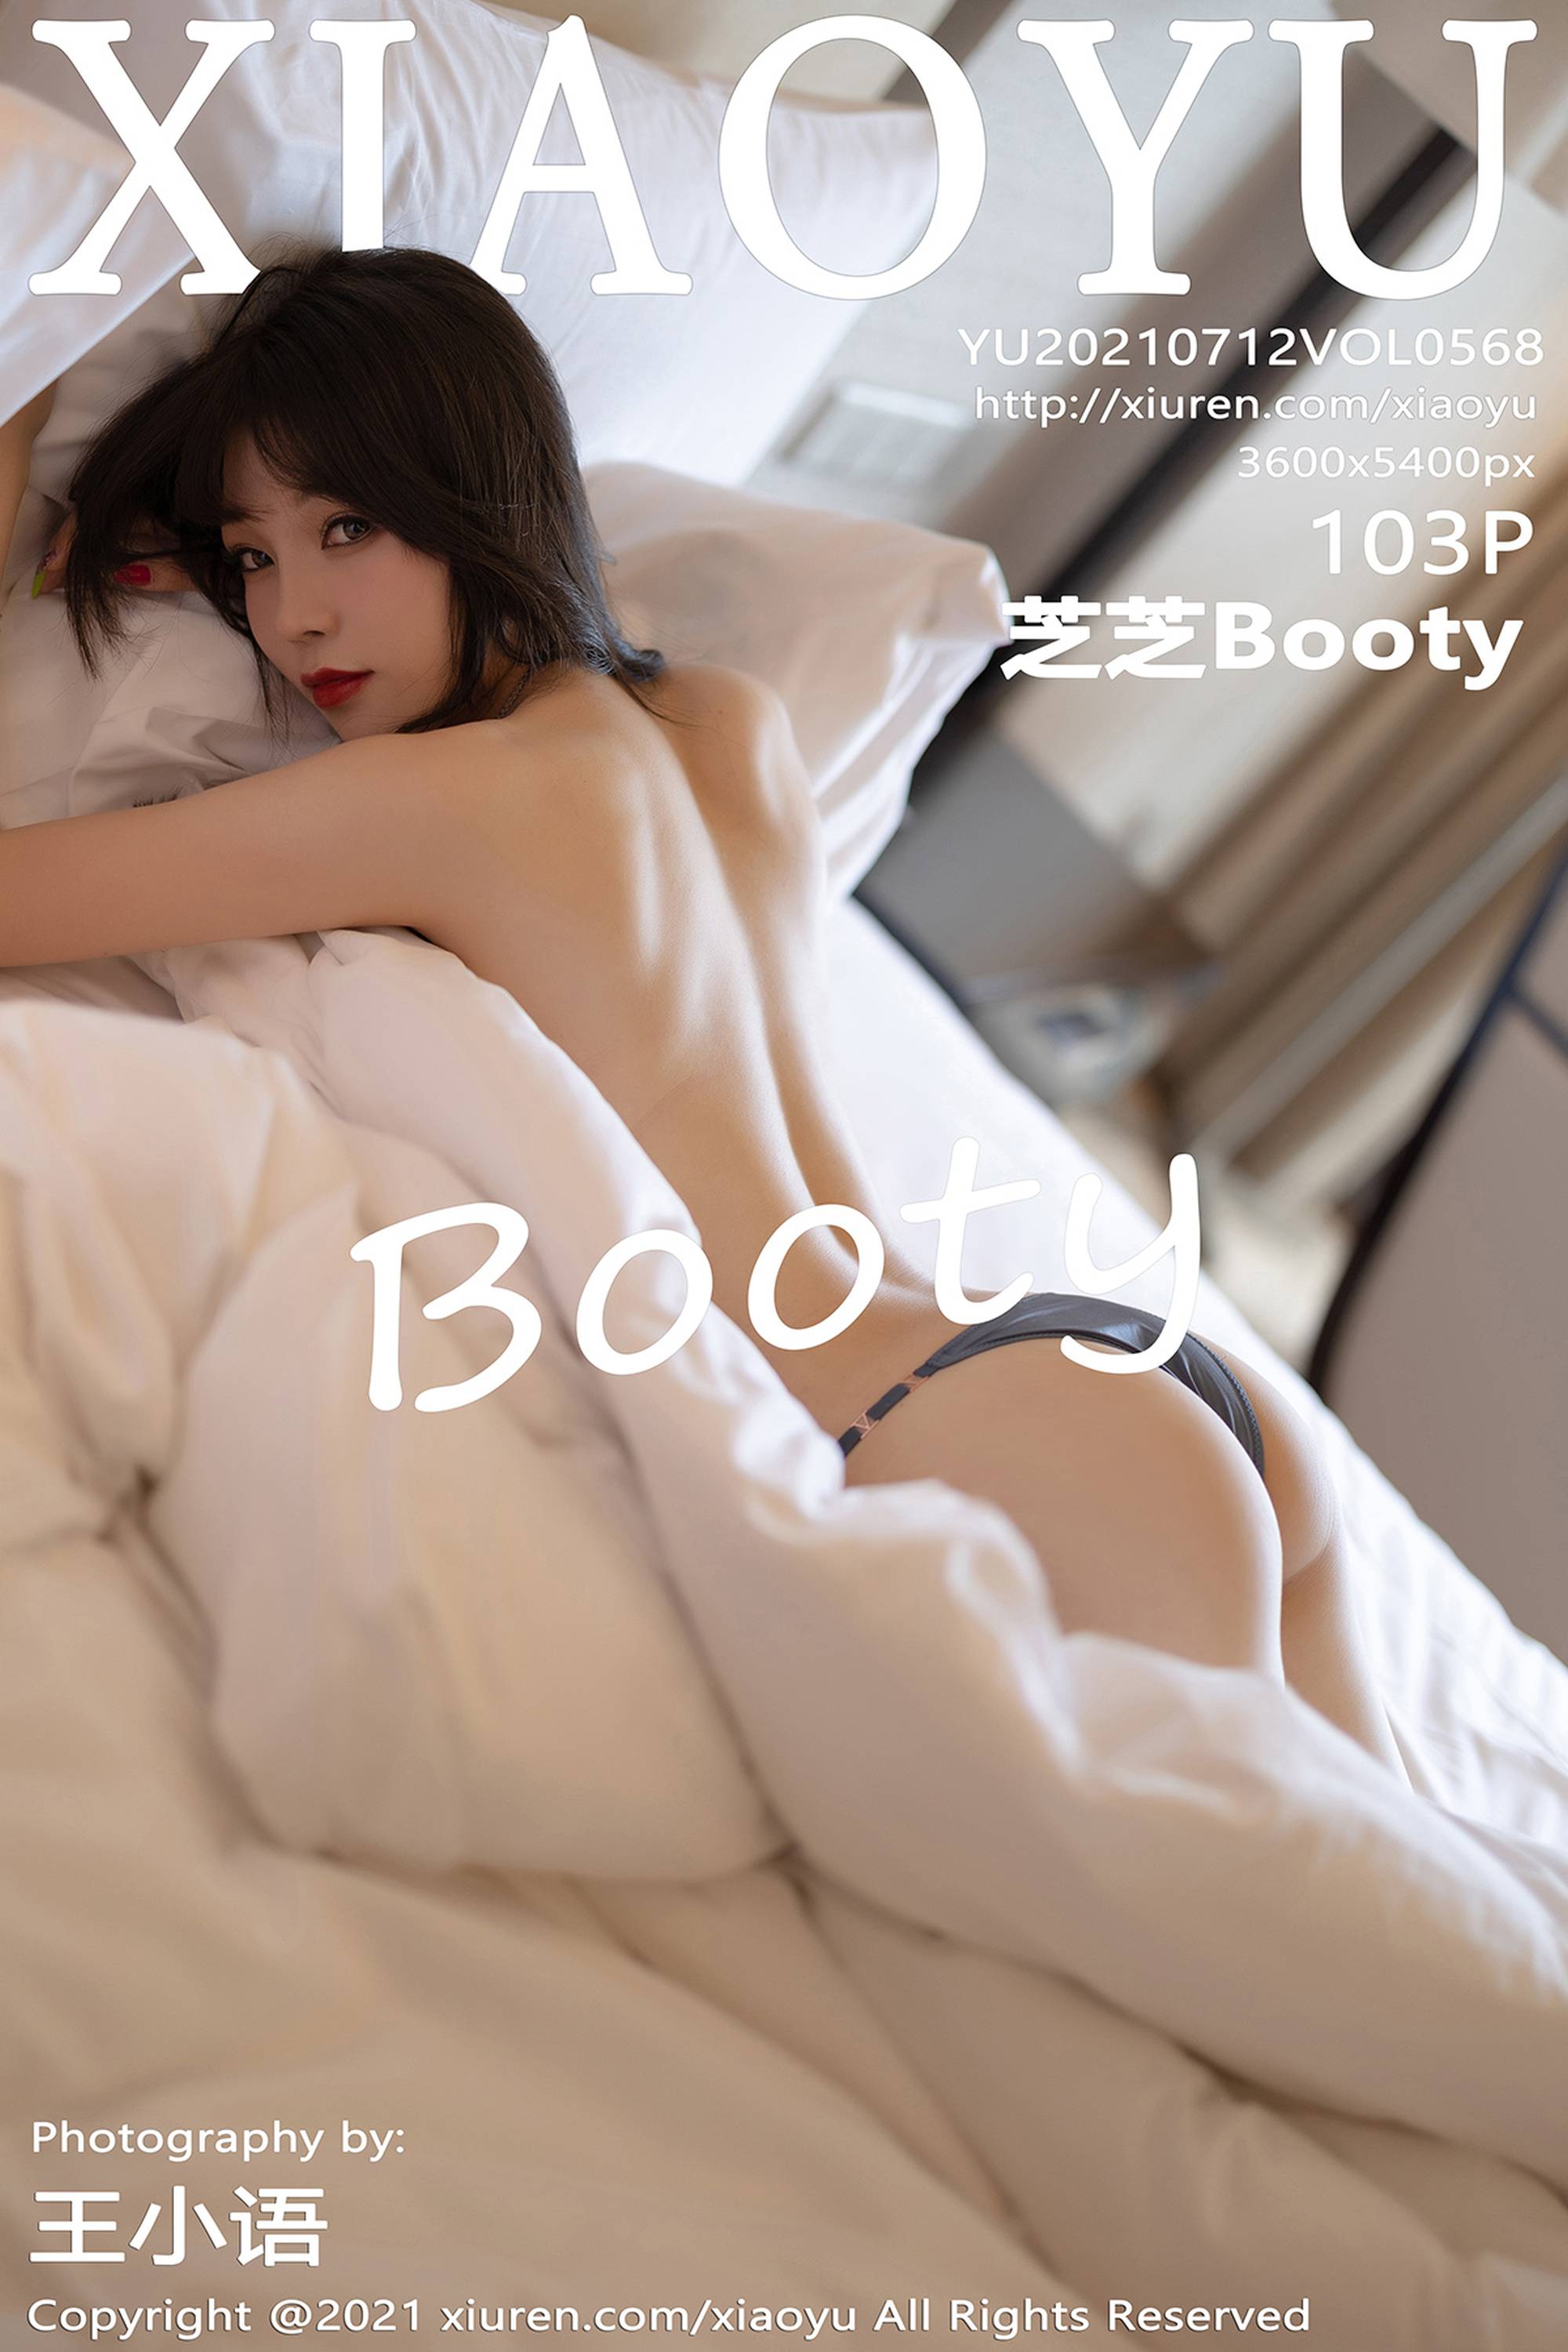 【XIAOYU畫語系列】2021.07.12 Vol.568 芝芝Booty完整版無水印寫真【104P】 - 貼圖 - 絲襪美腿 -